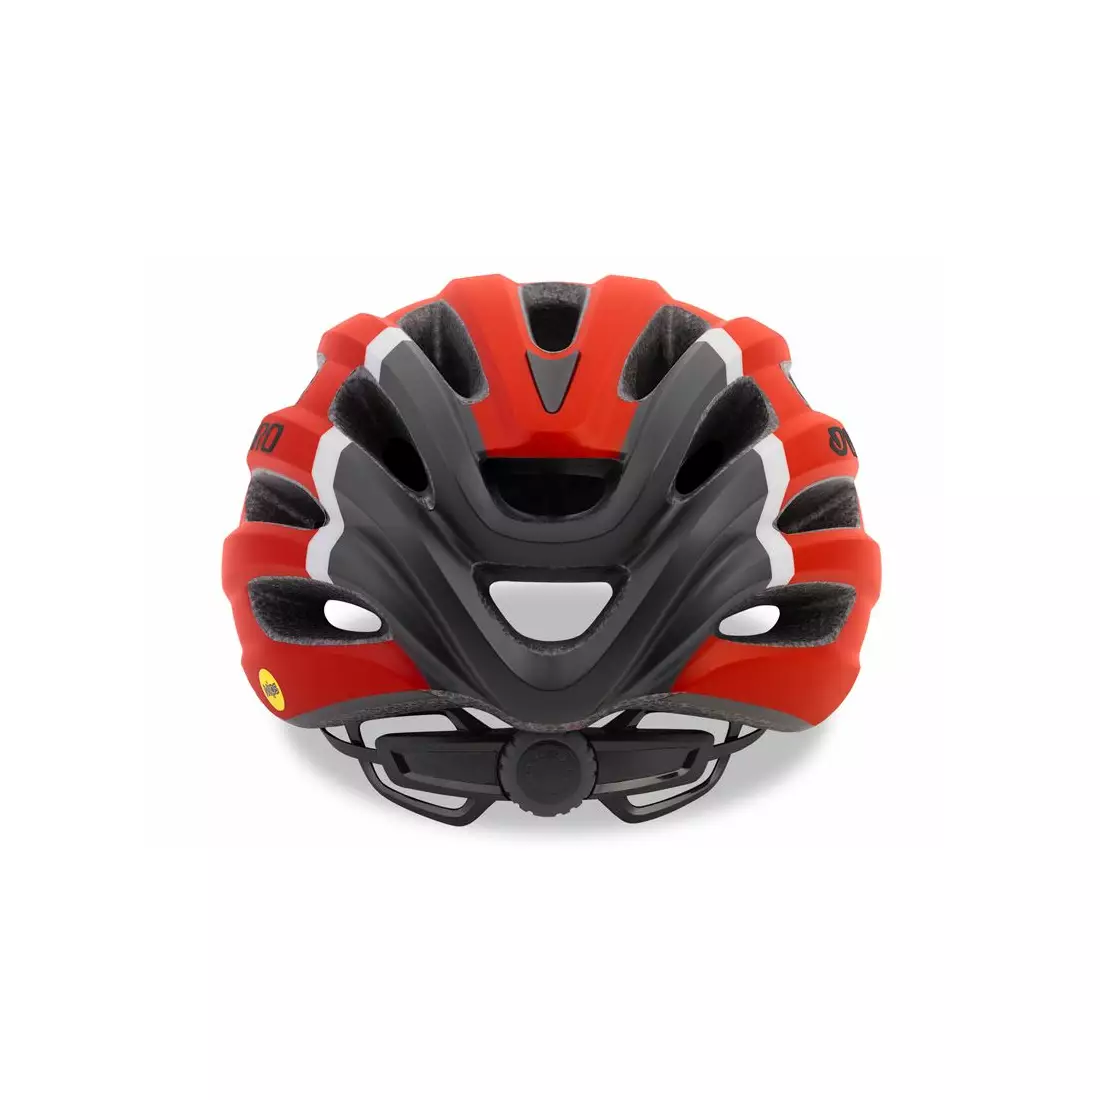 GIRO GR-7089374 kid's helmet HALE INTEGRATED MIPS matte bright red 